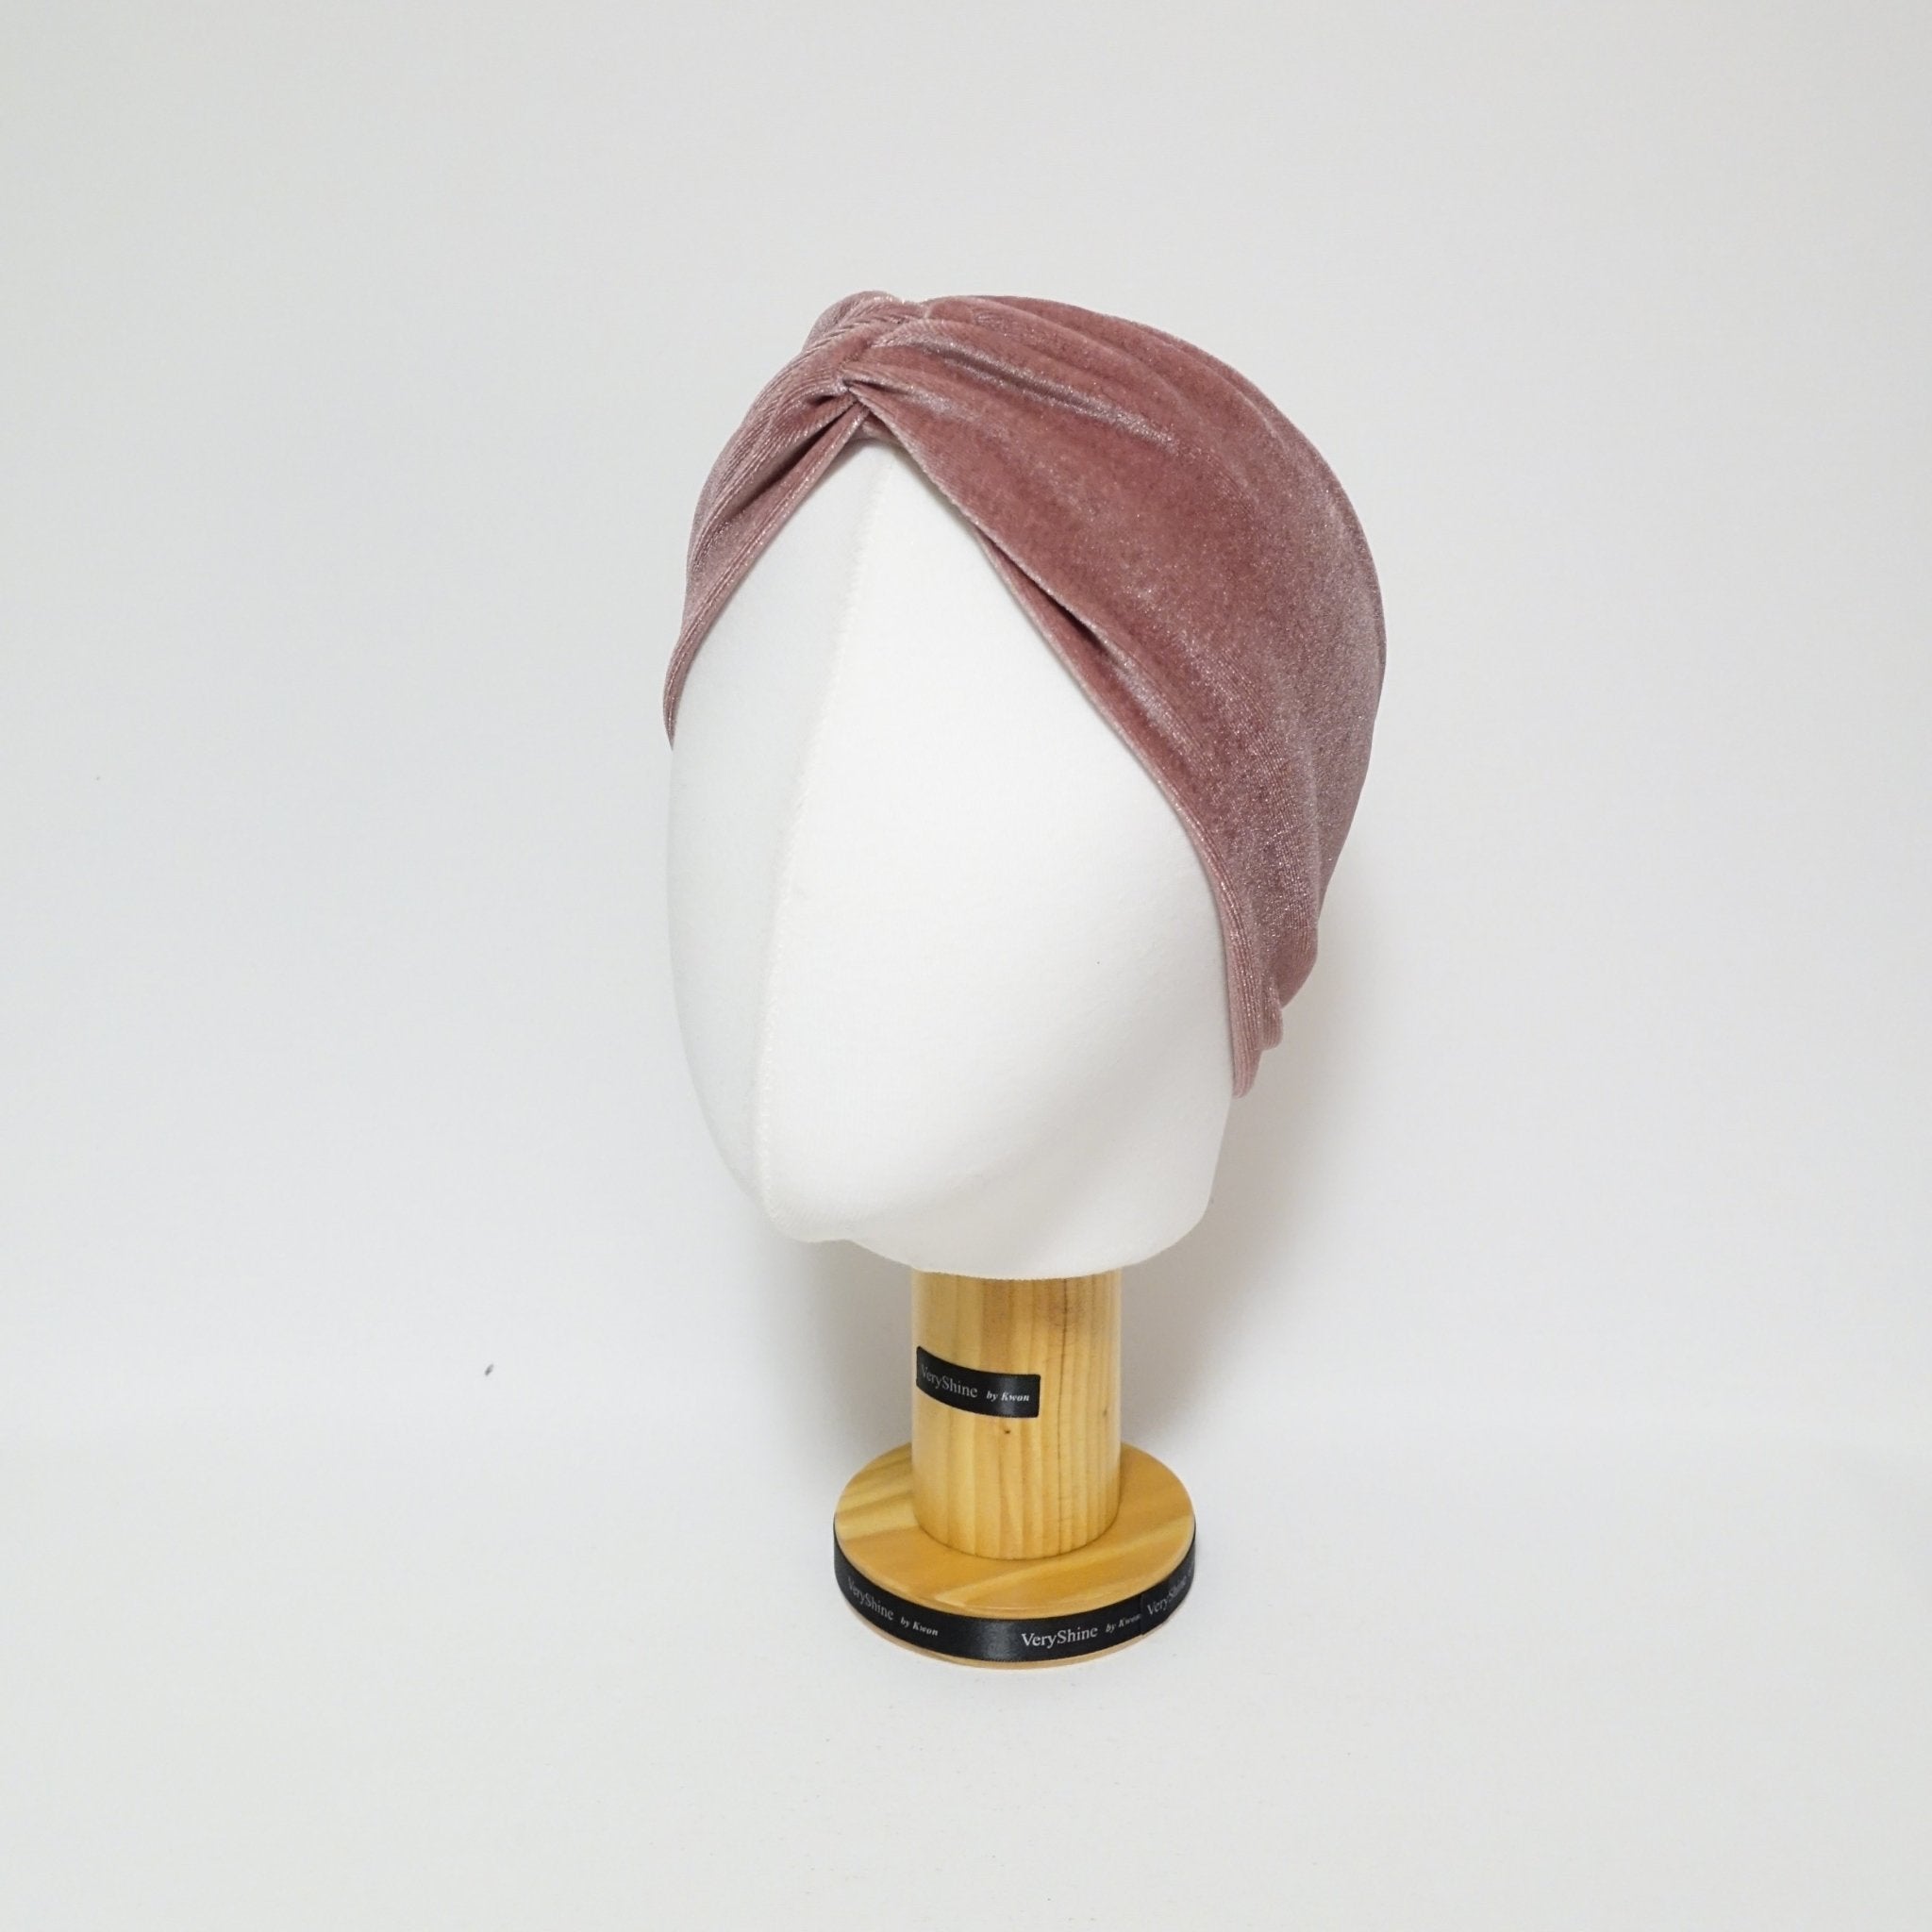 veryshine.com hairband/headband Pink velvet span front twist non elastic headband fashion Fall Winter headband